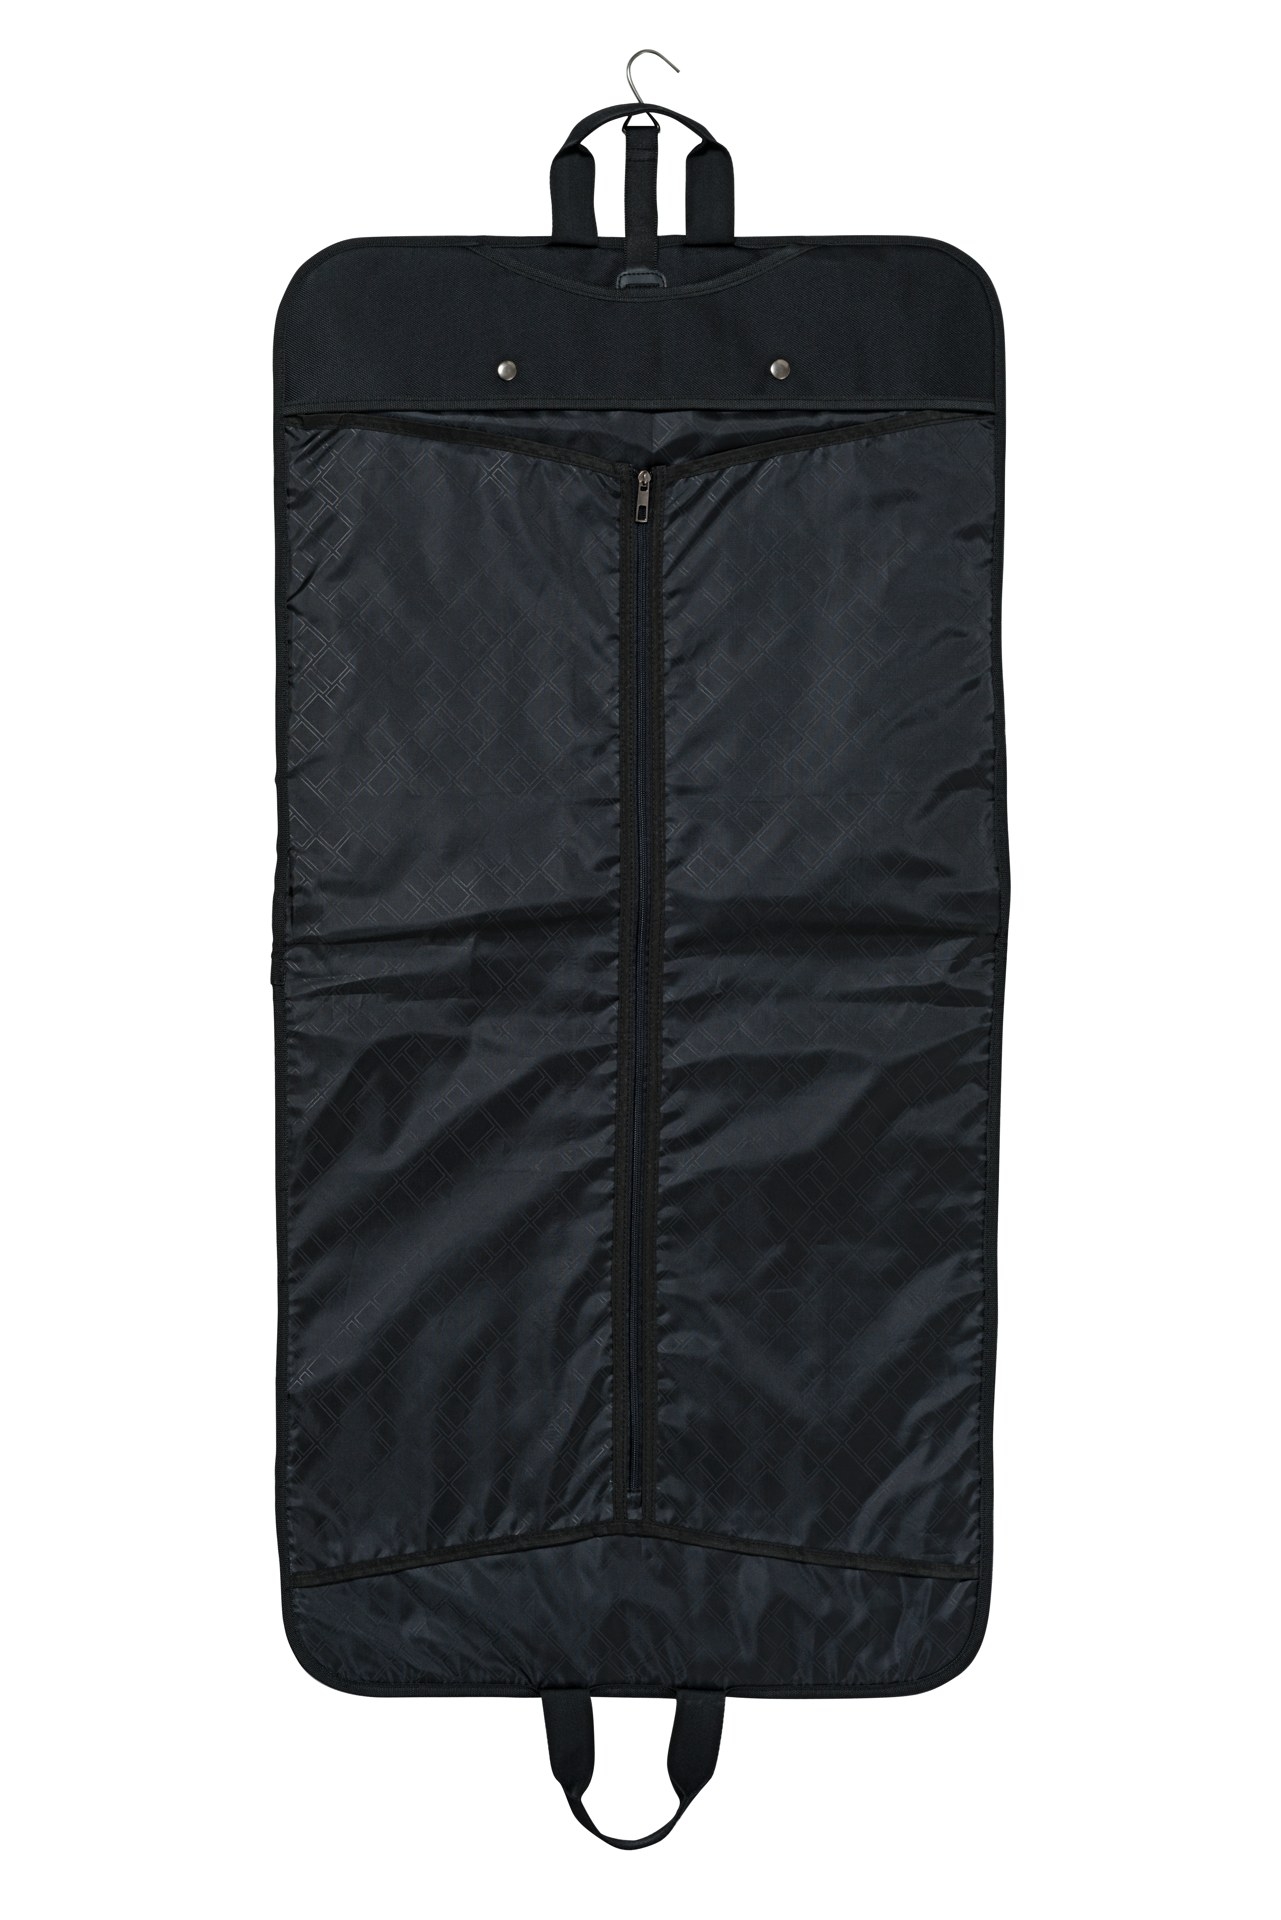 E-shop Travelite Mobile Garment Bag Black